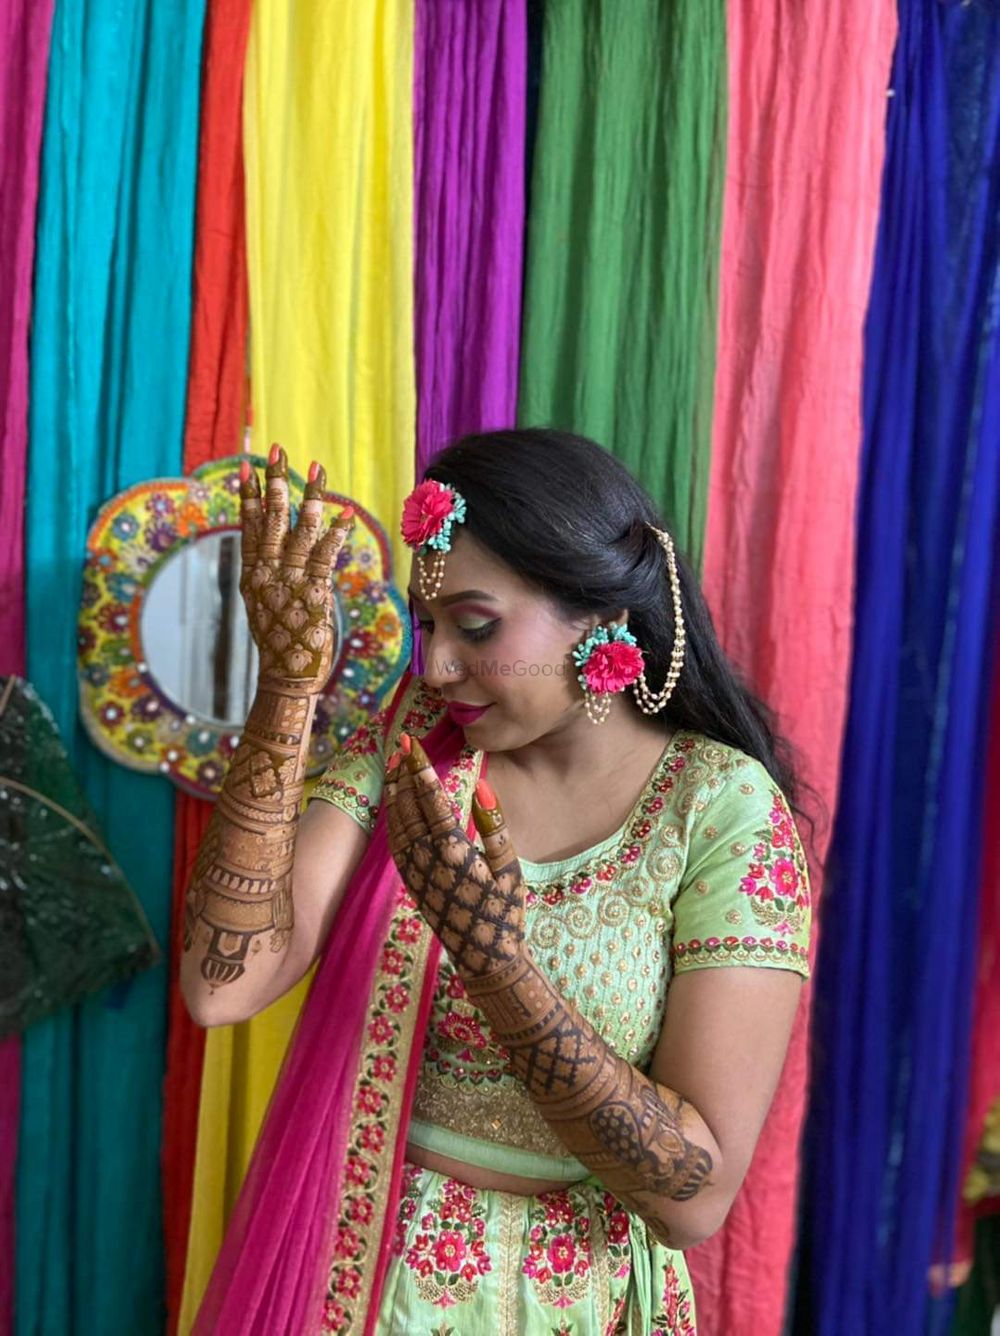 Photo From Special Bridal Mehandi Design - By Rahul Mehandi Art